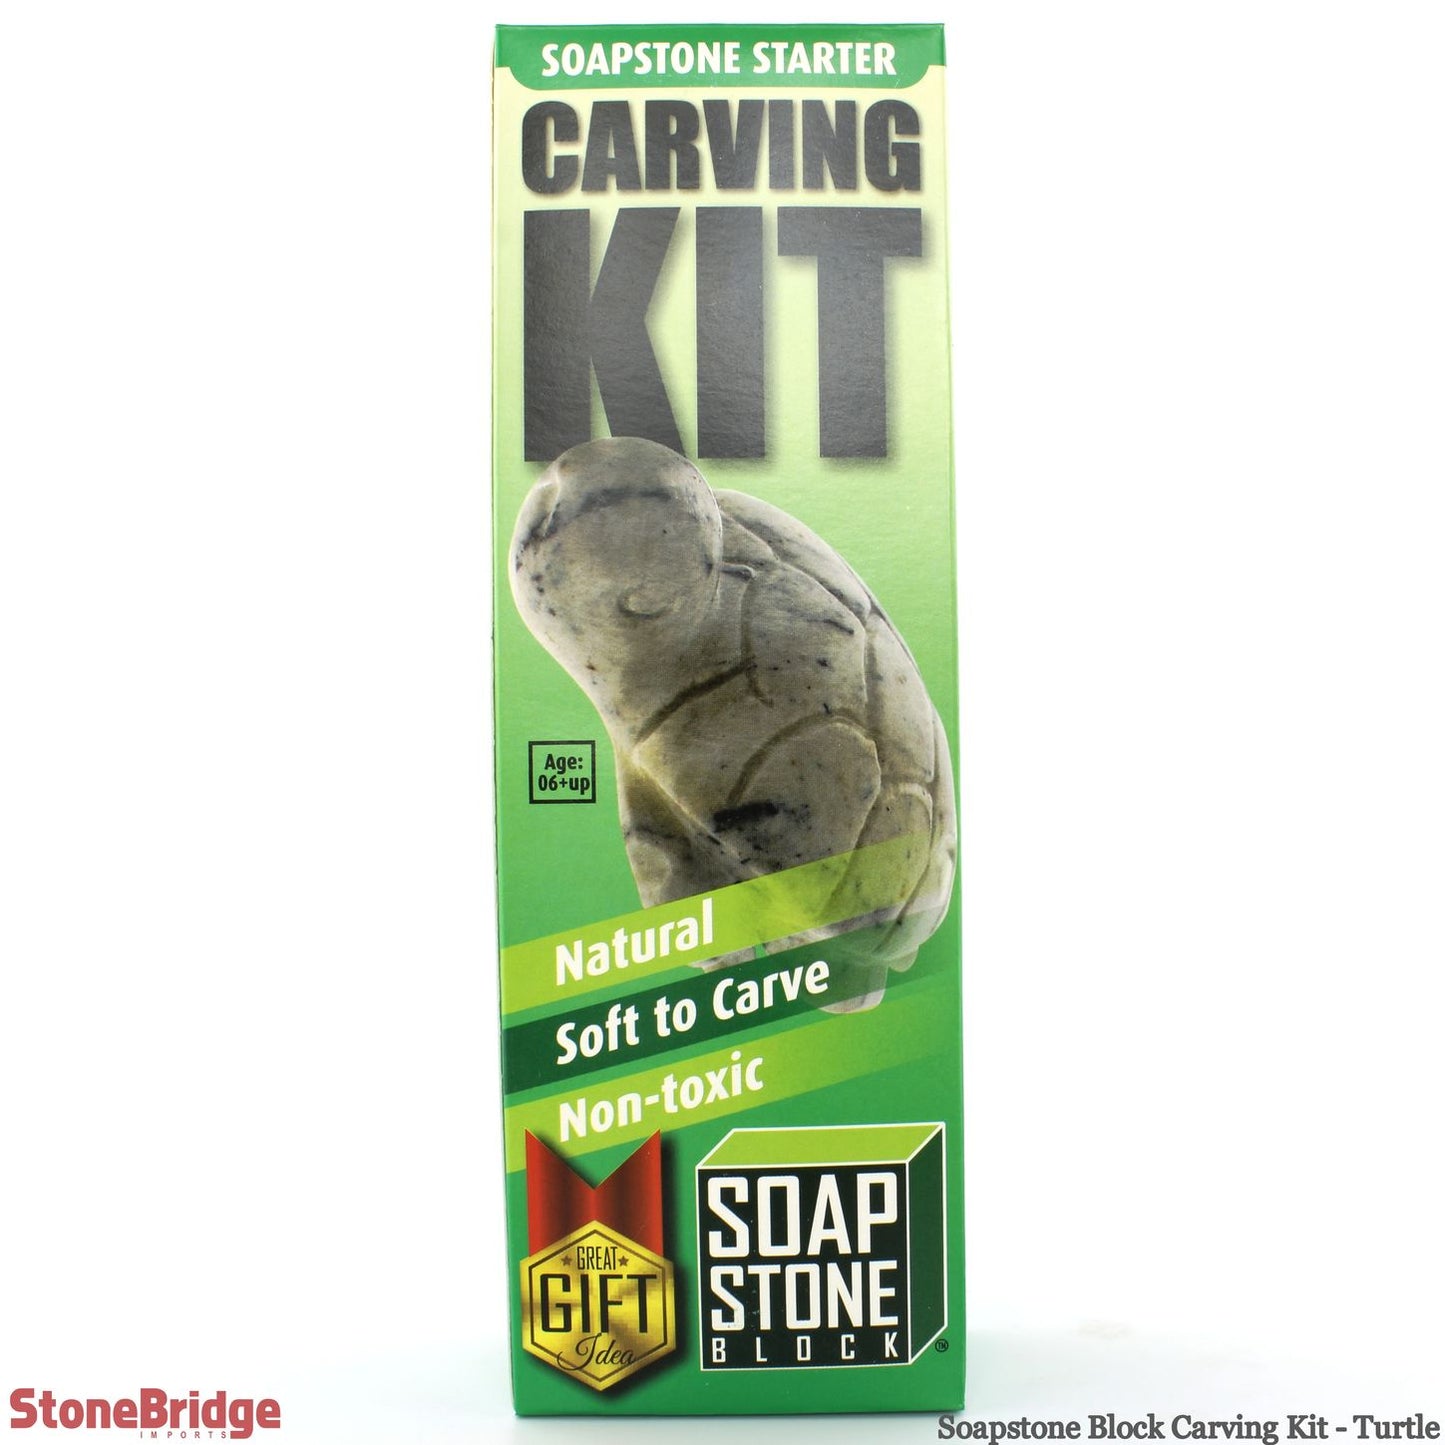 Soapstone Carving Kit - Turtle